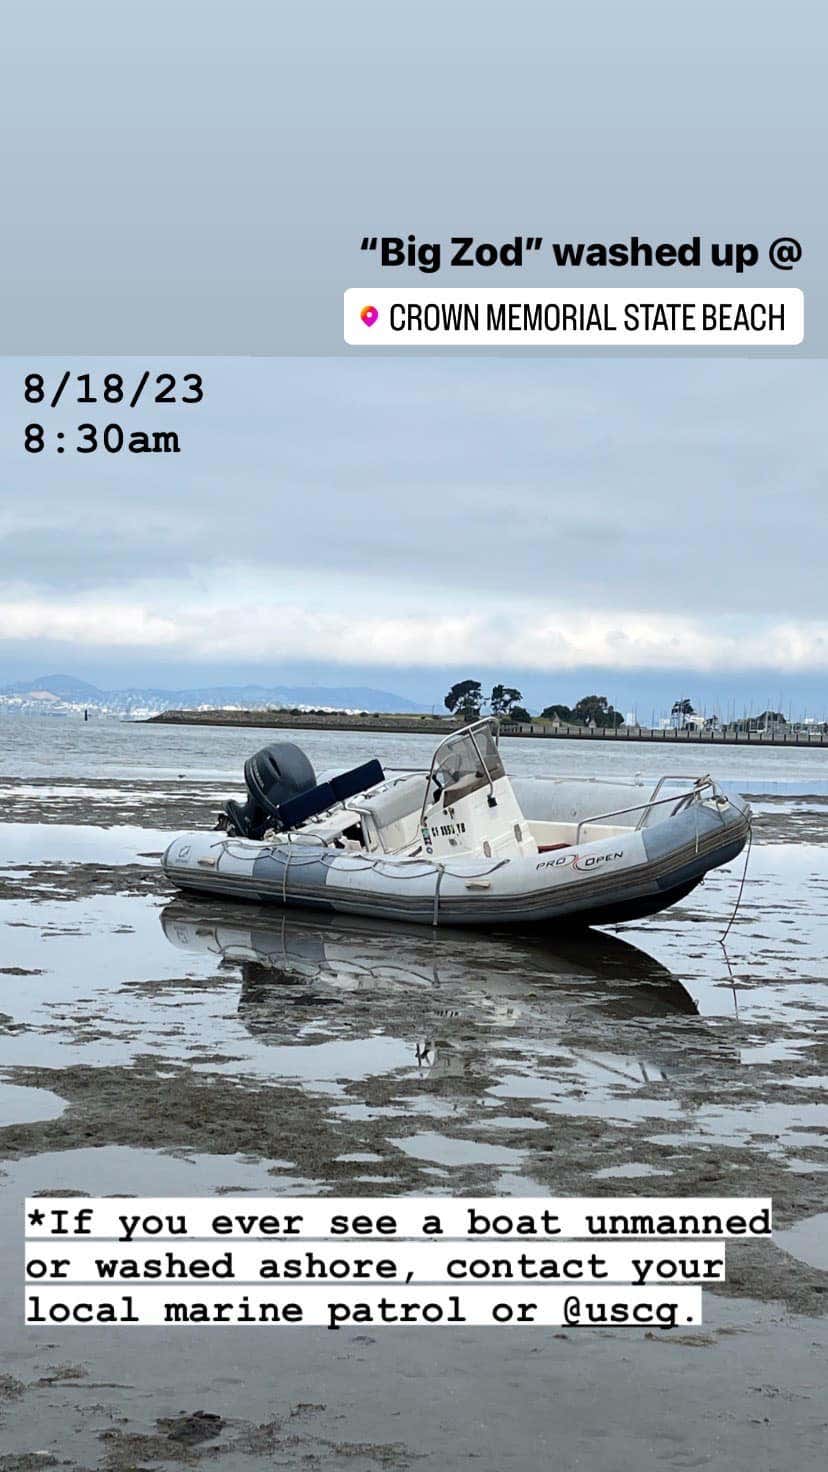 Alleged seafaring bandits nabbed on San Francisco Bay after series of boat raids